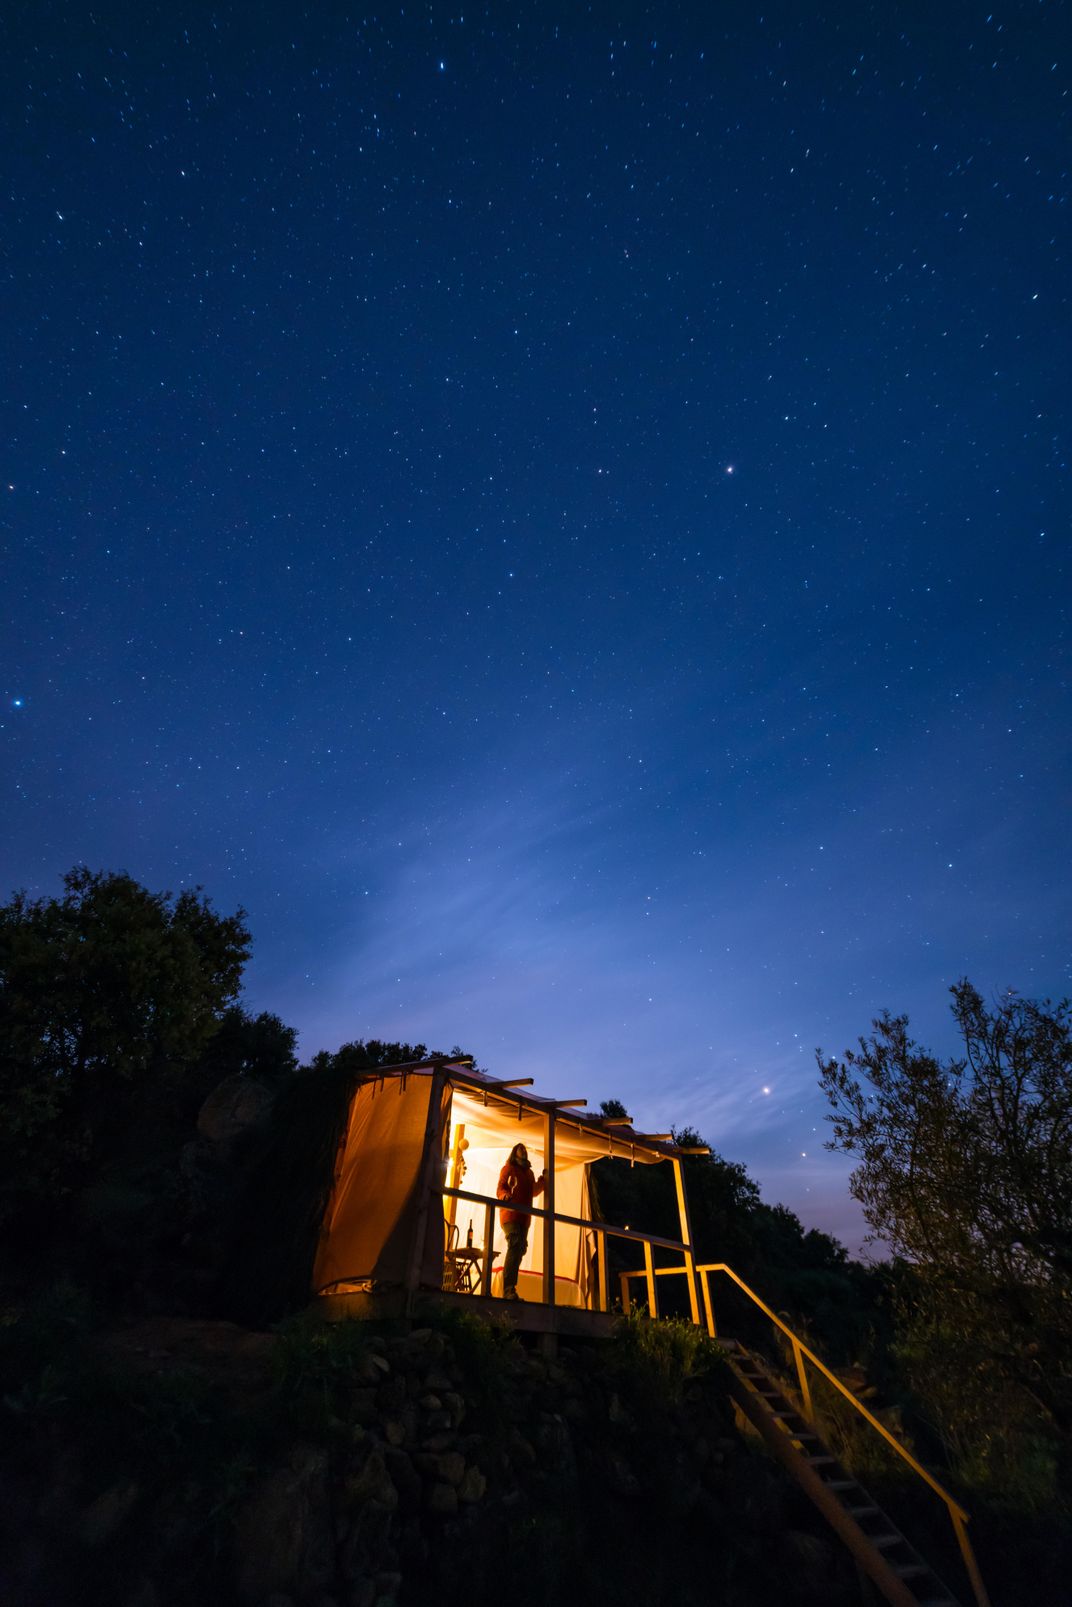 Star Camp, Faia Brava, Côa Valley, Western Iberia, Portugal